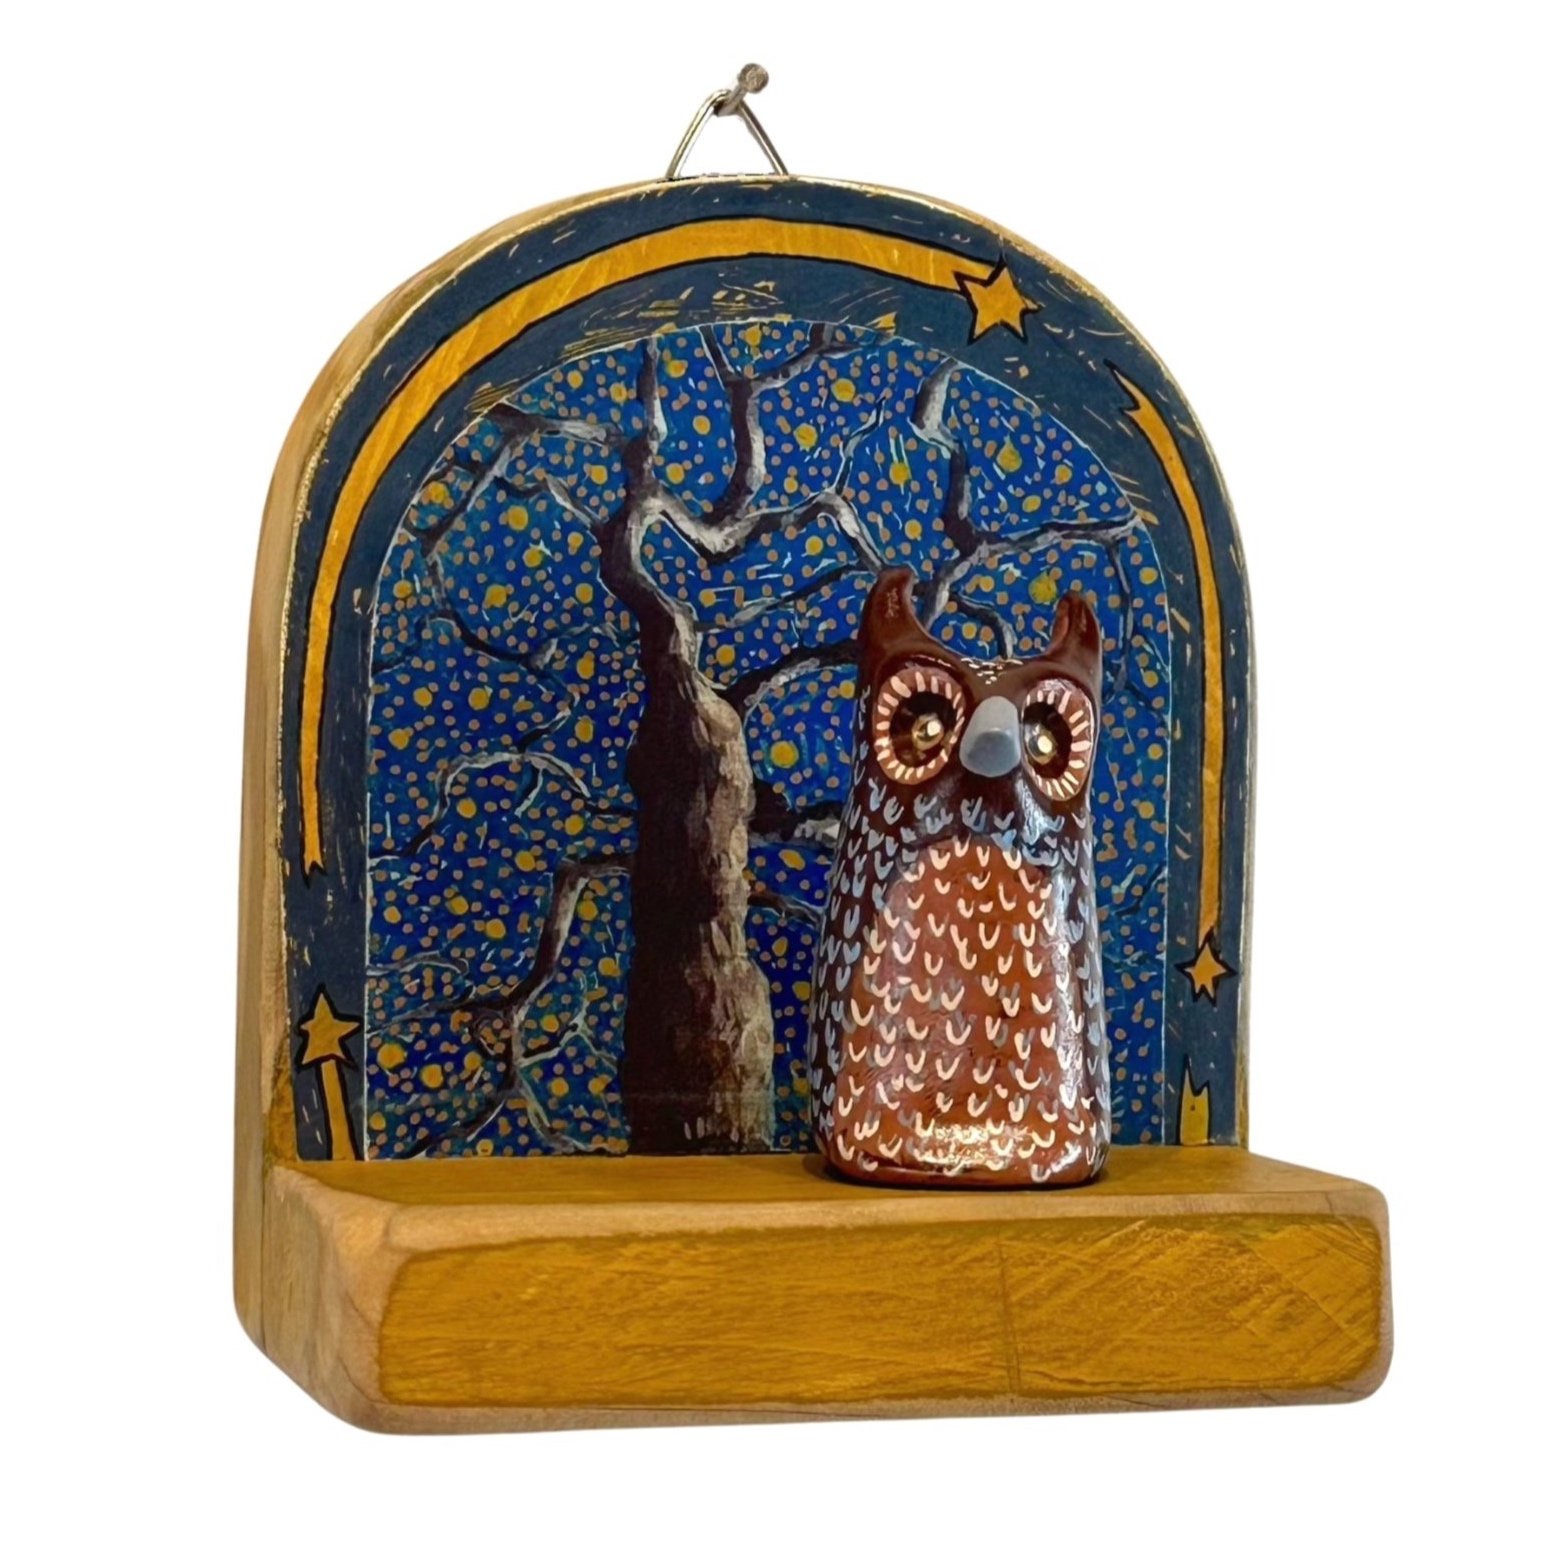 Olive the Owl (Talisman of Observation)